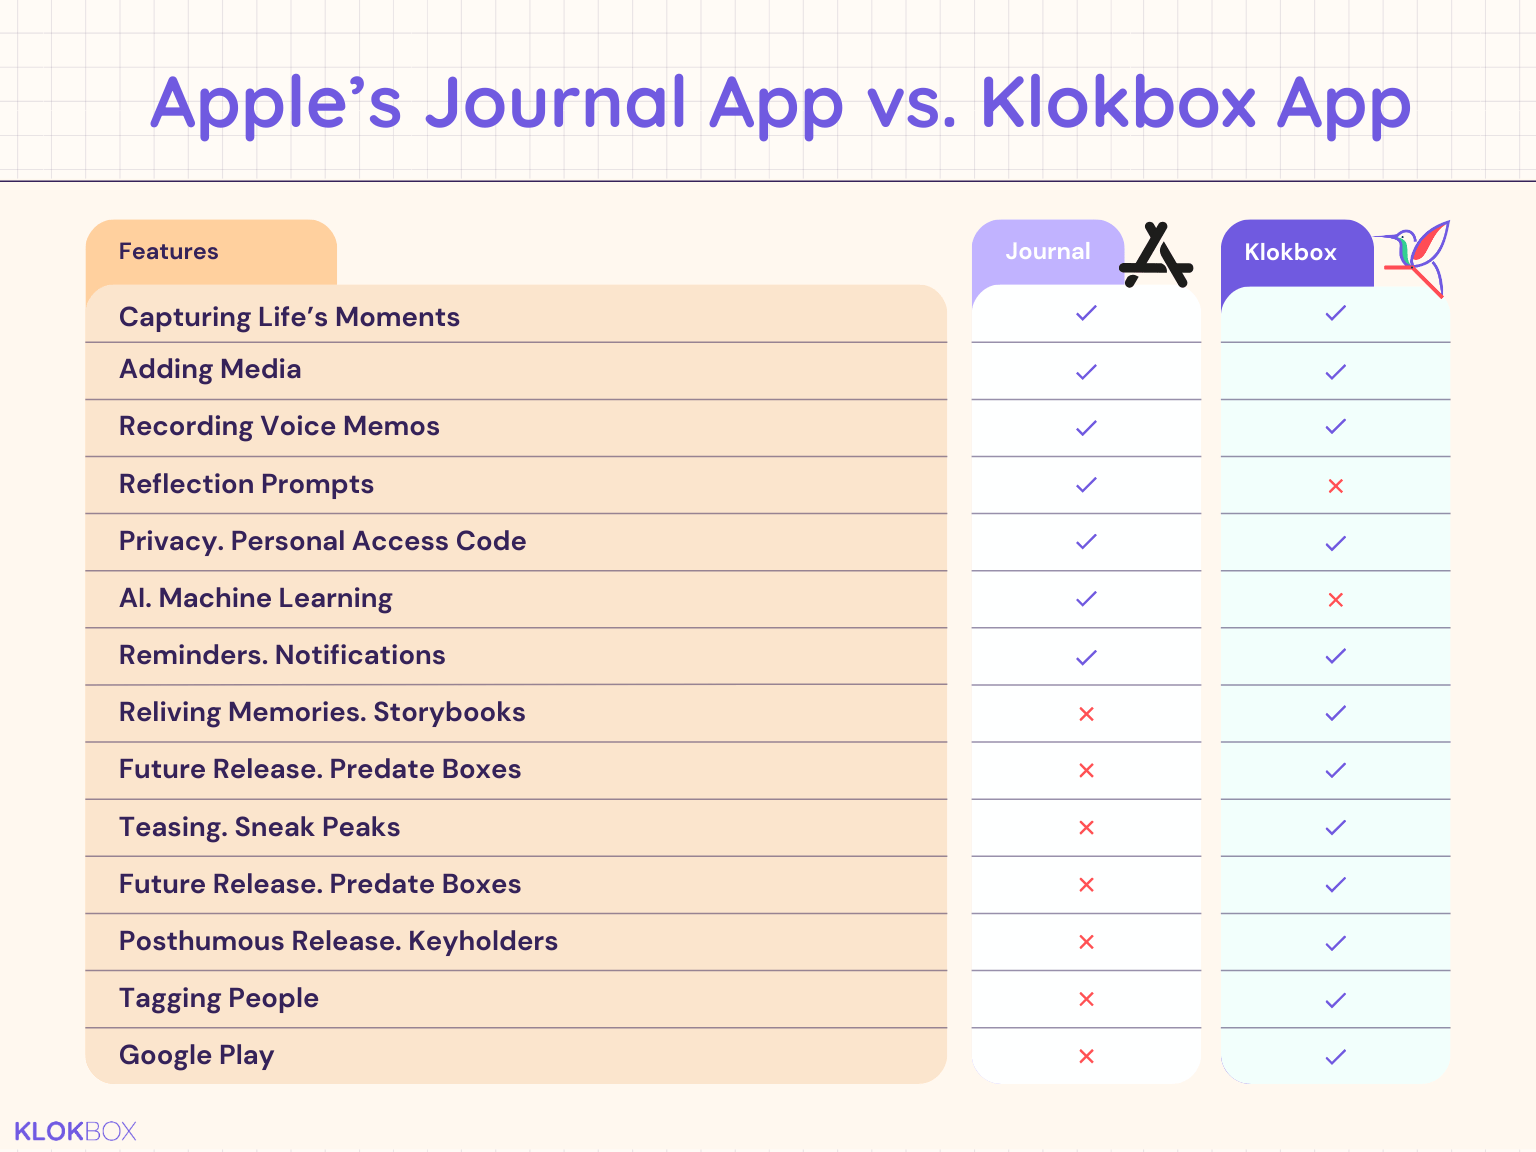 Features Analysis: Apple’s Journal App vs. Klokbox App